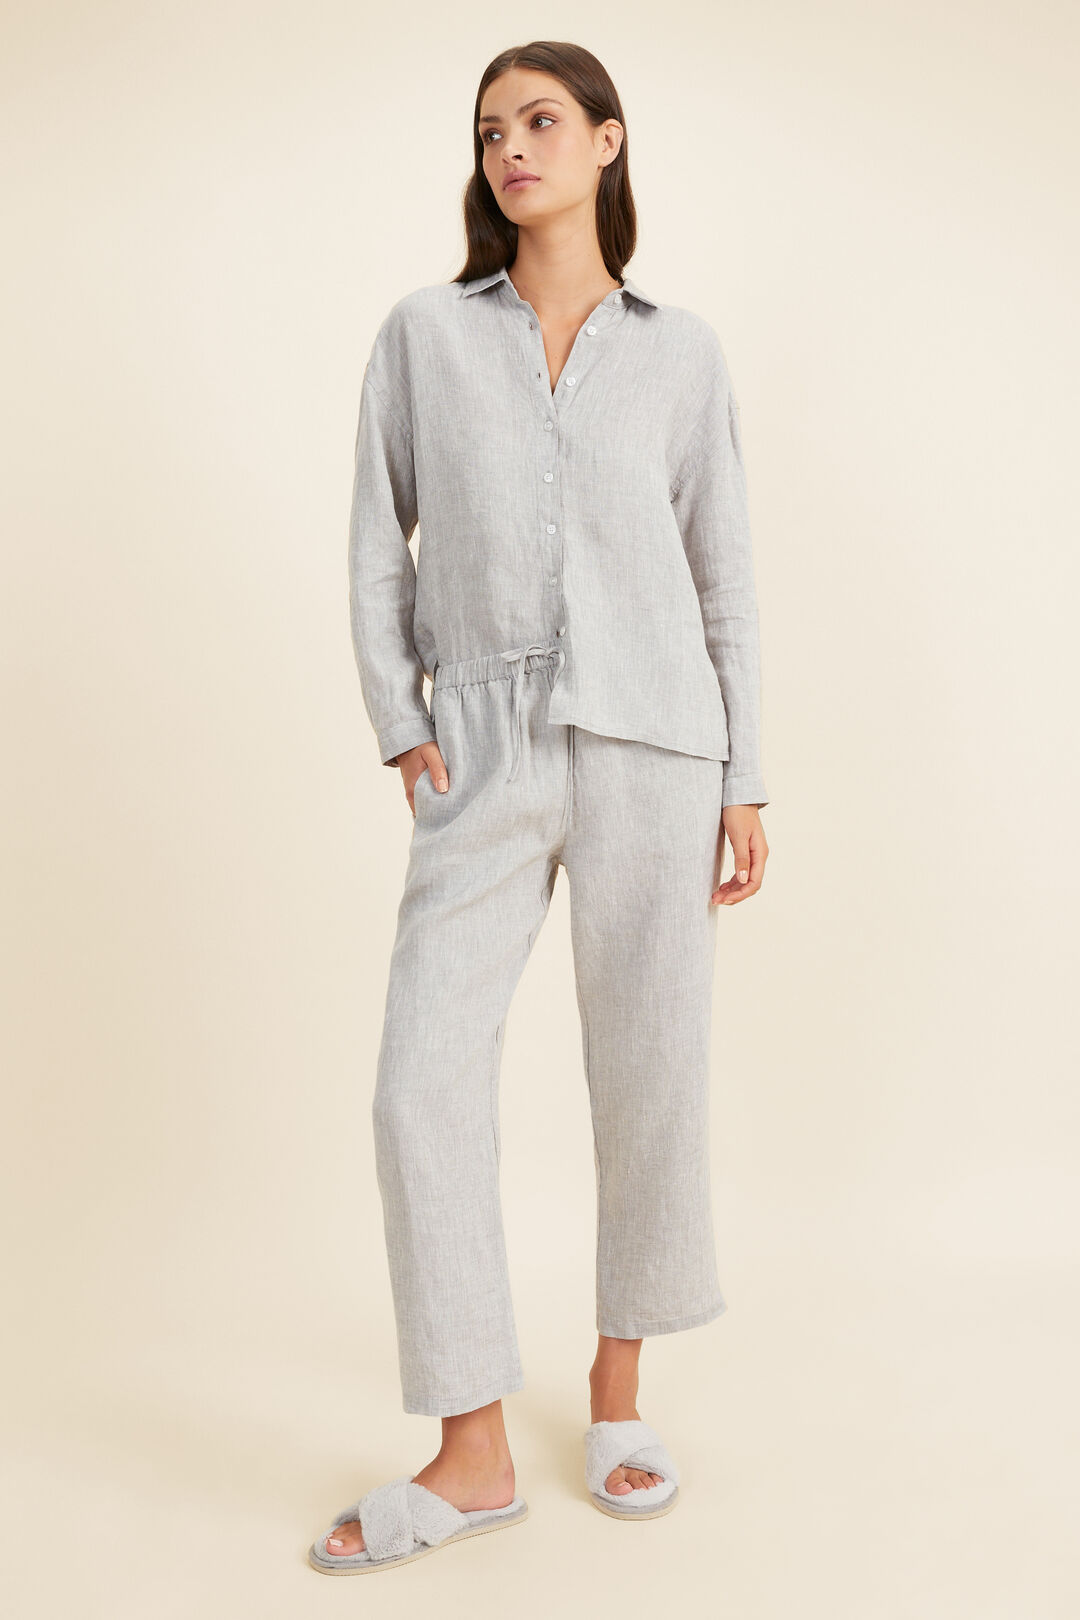 Linen Pyjama Shirt   Grey Cross Dye  hi-res